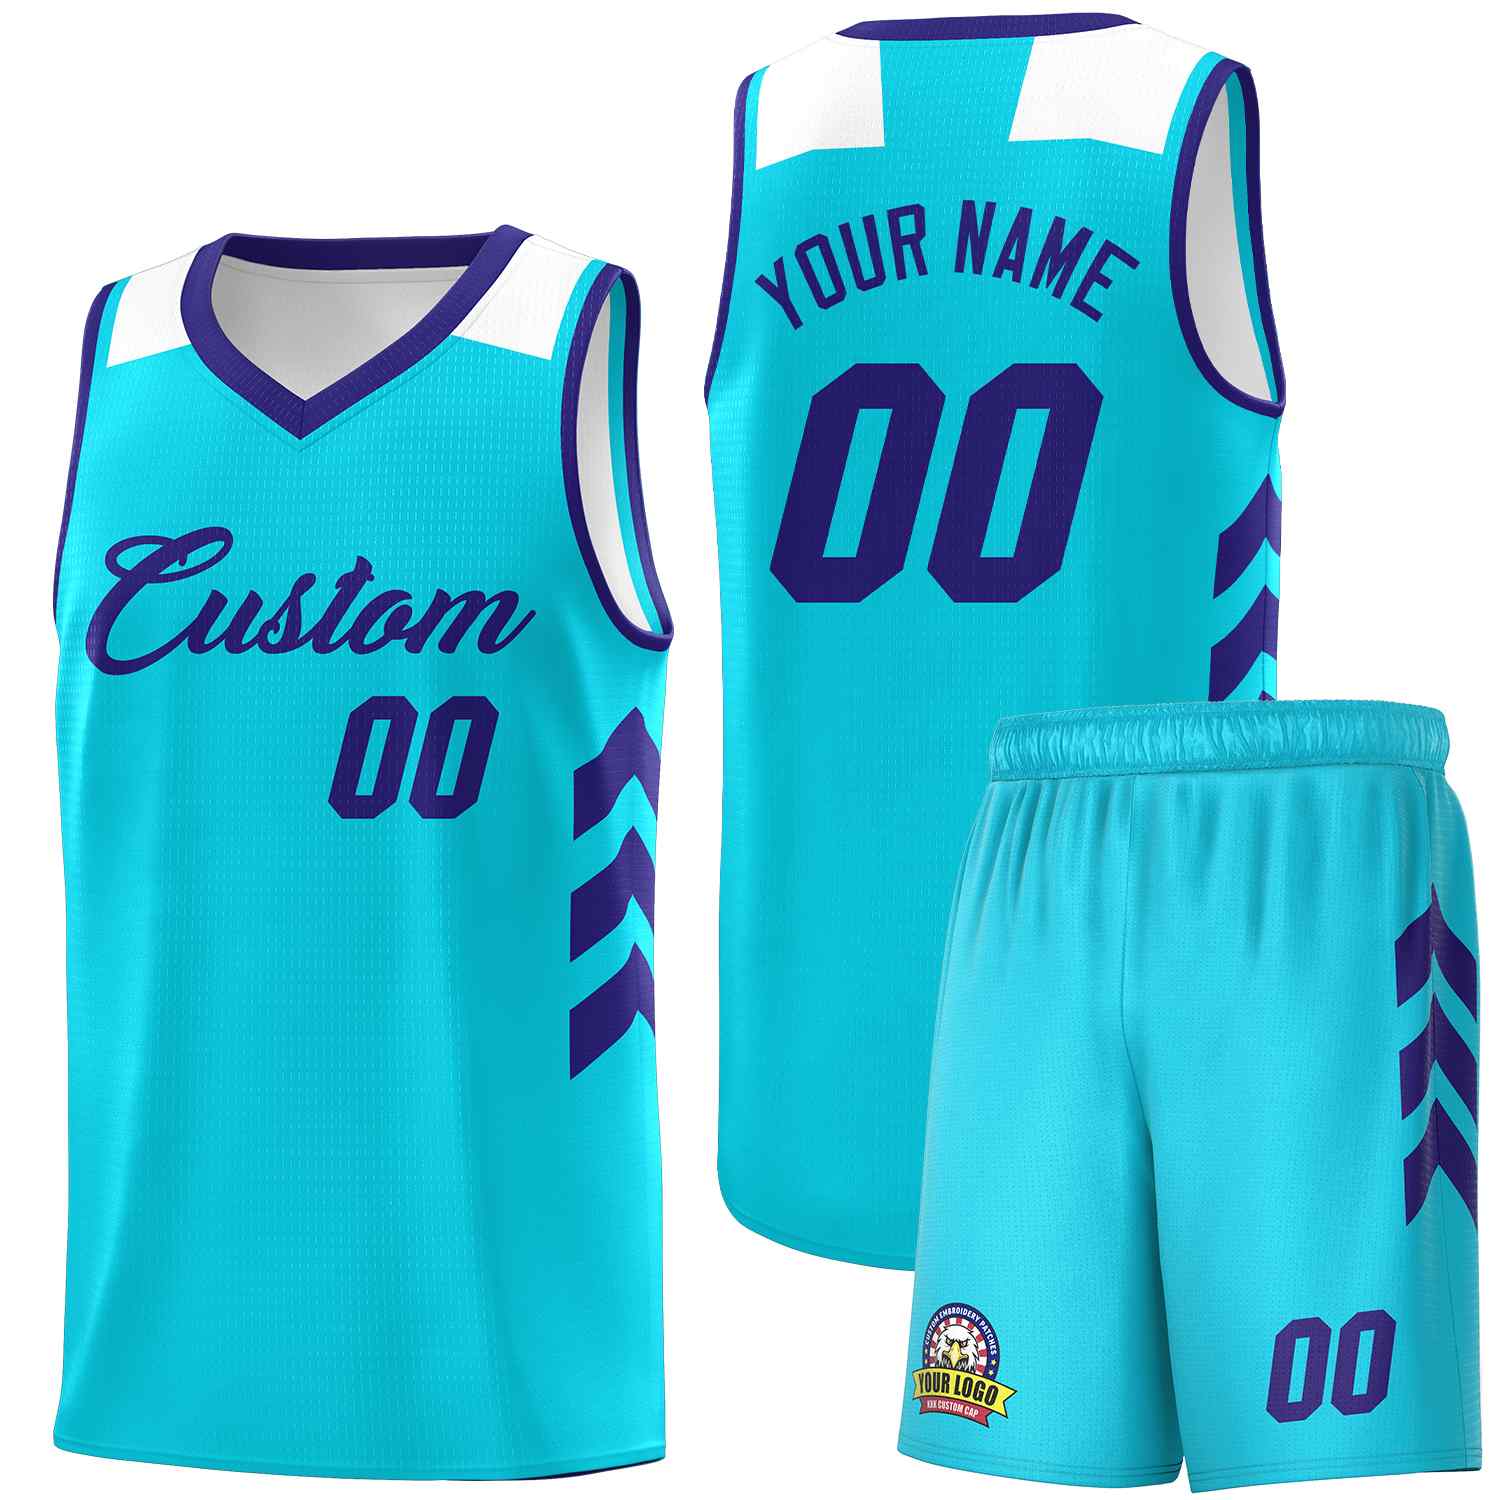 KXK Custom White Black Classic Sets Sports Uniform Basketball Jersey